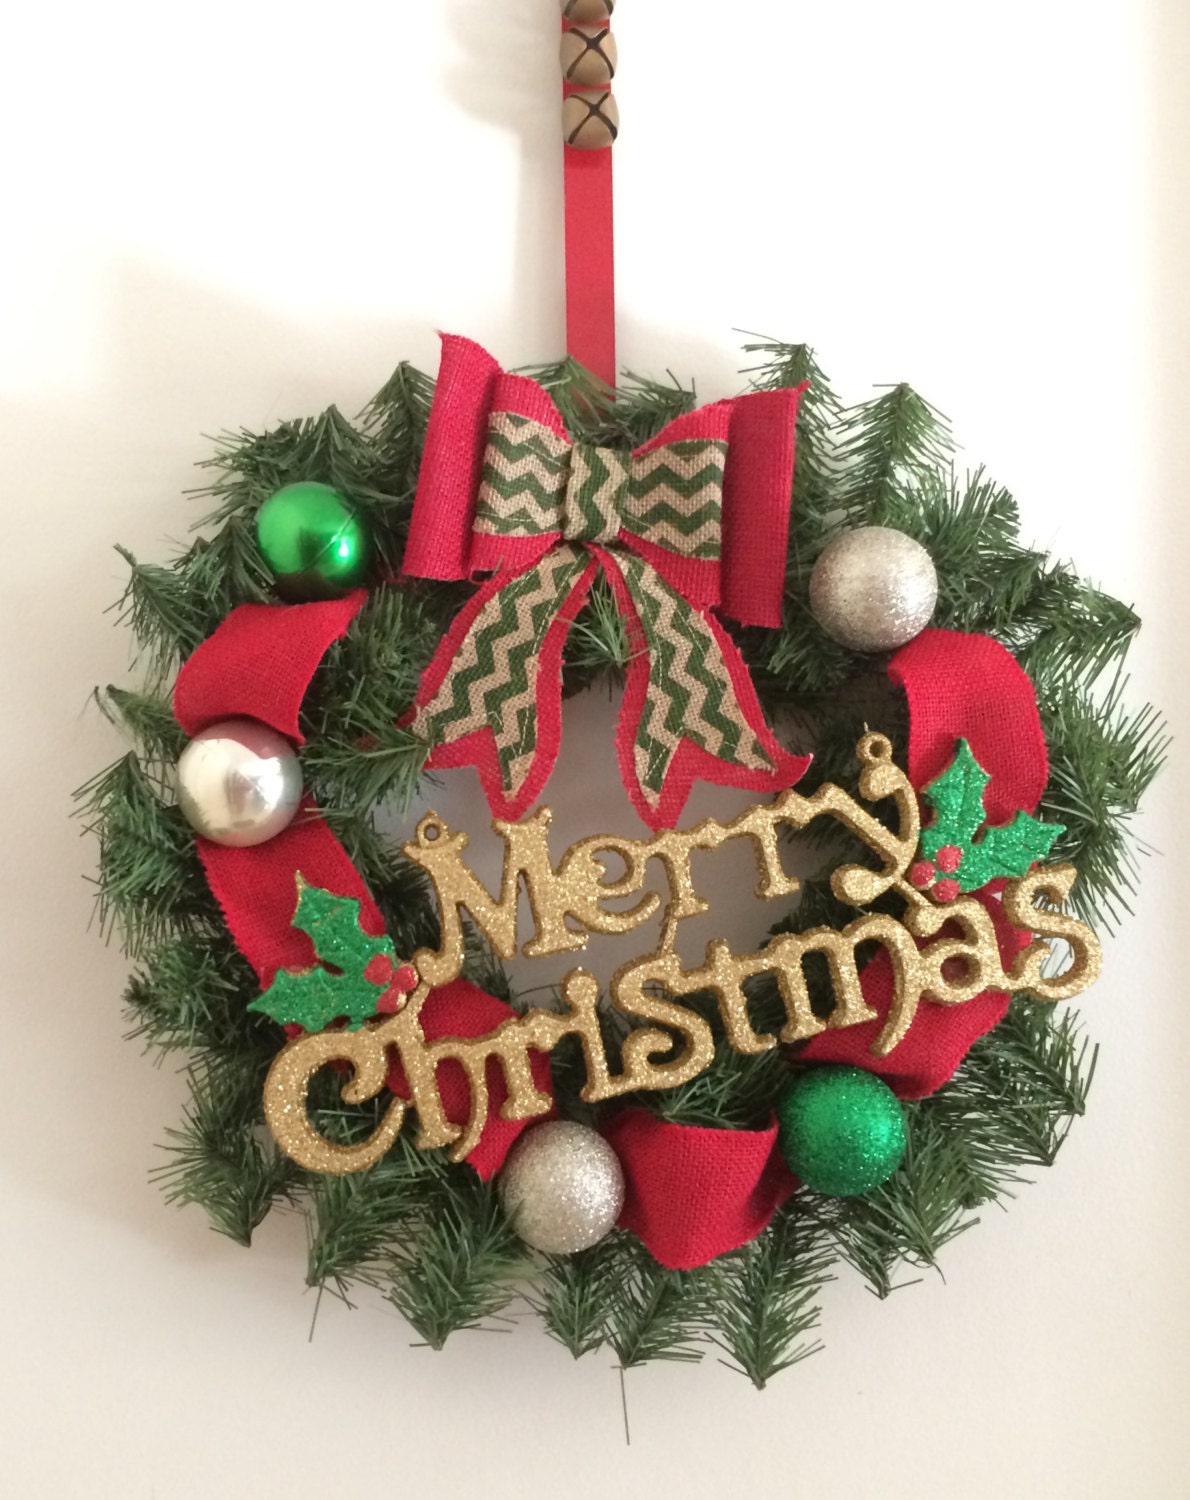 All things Christmas,burlap artifical pine wreath